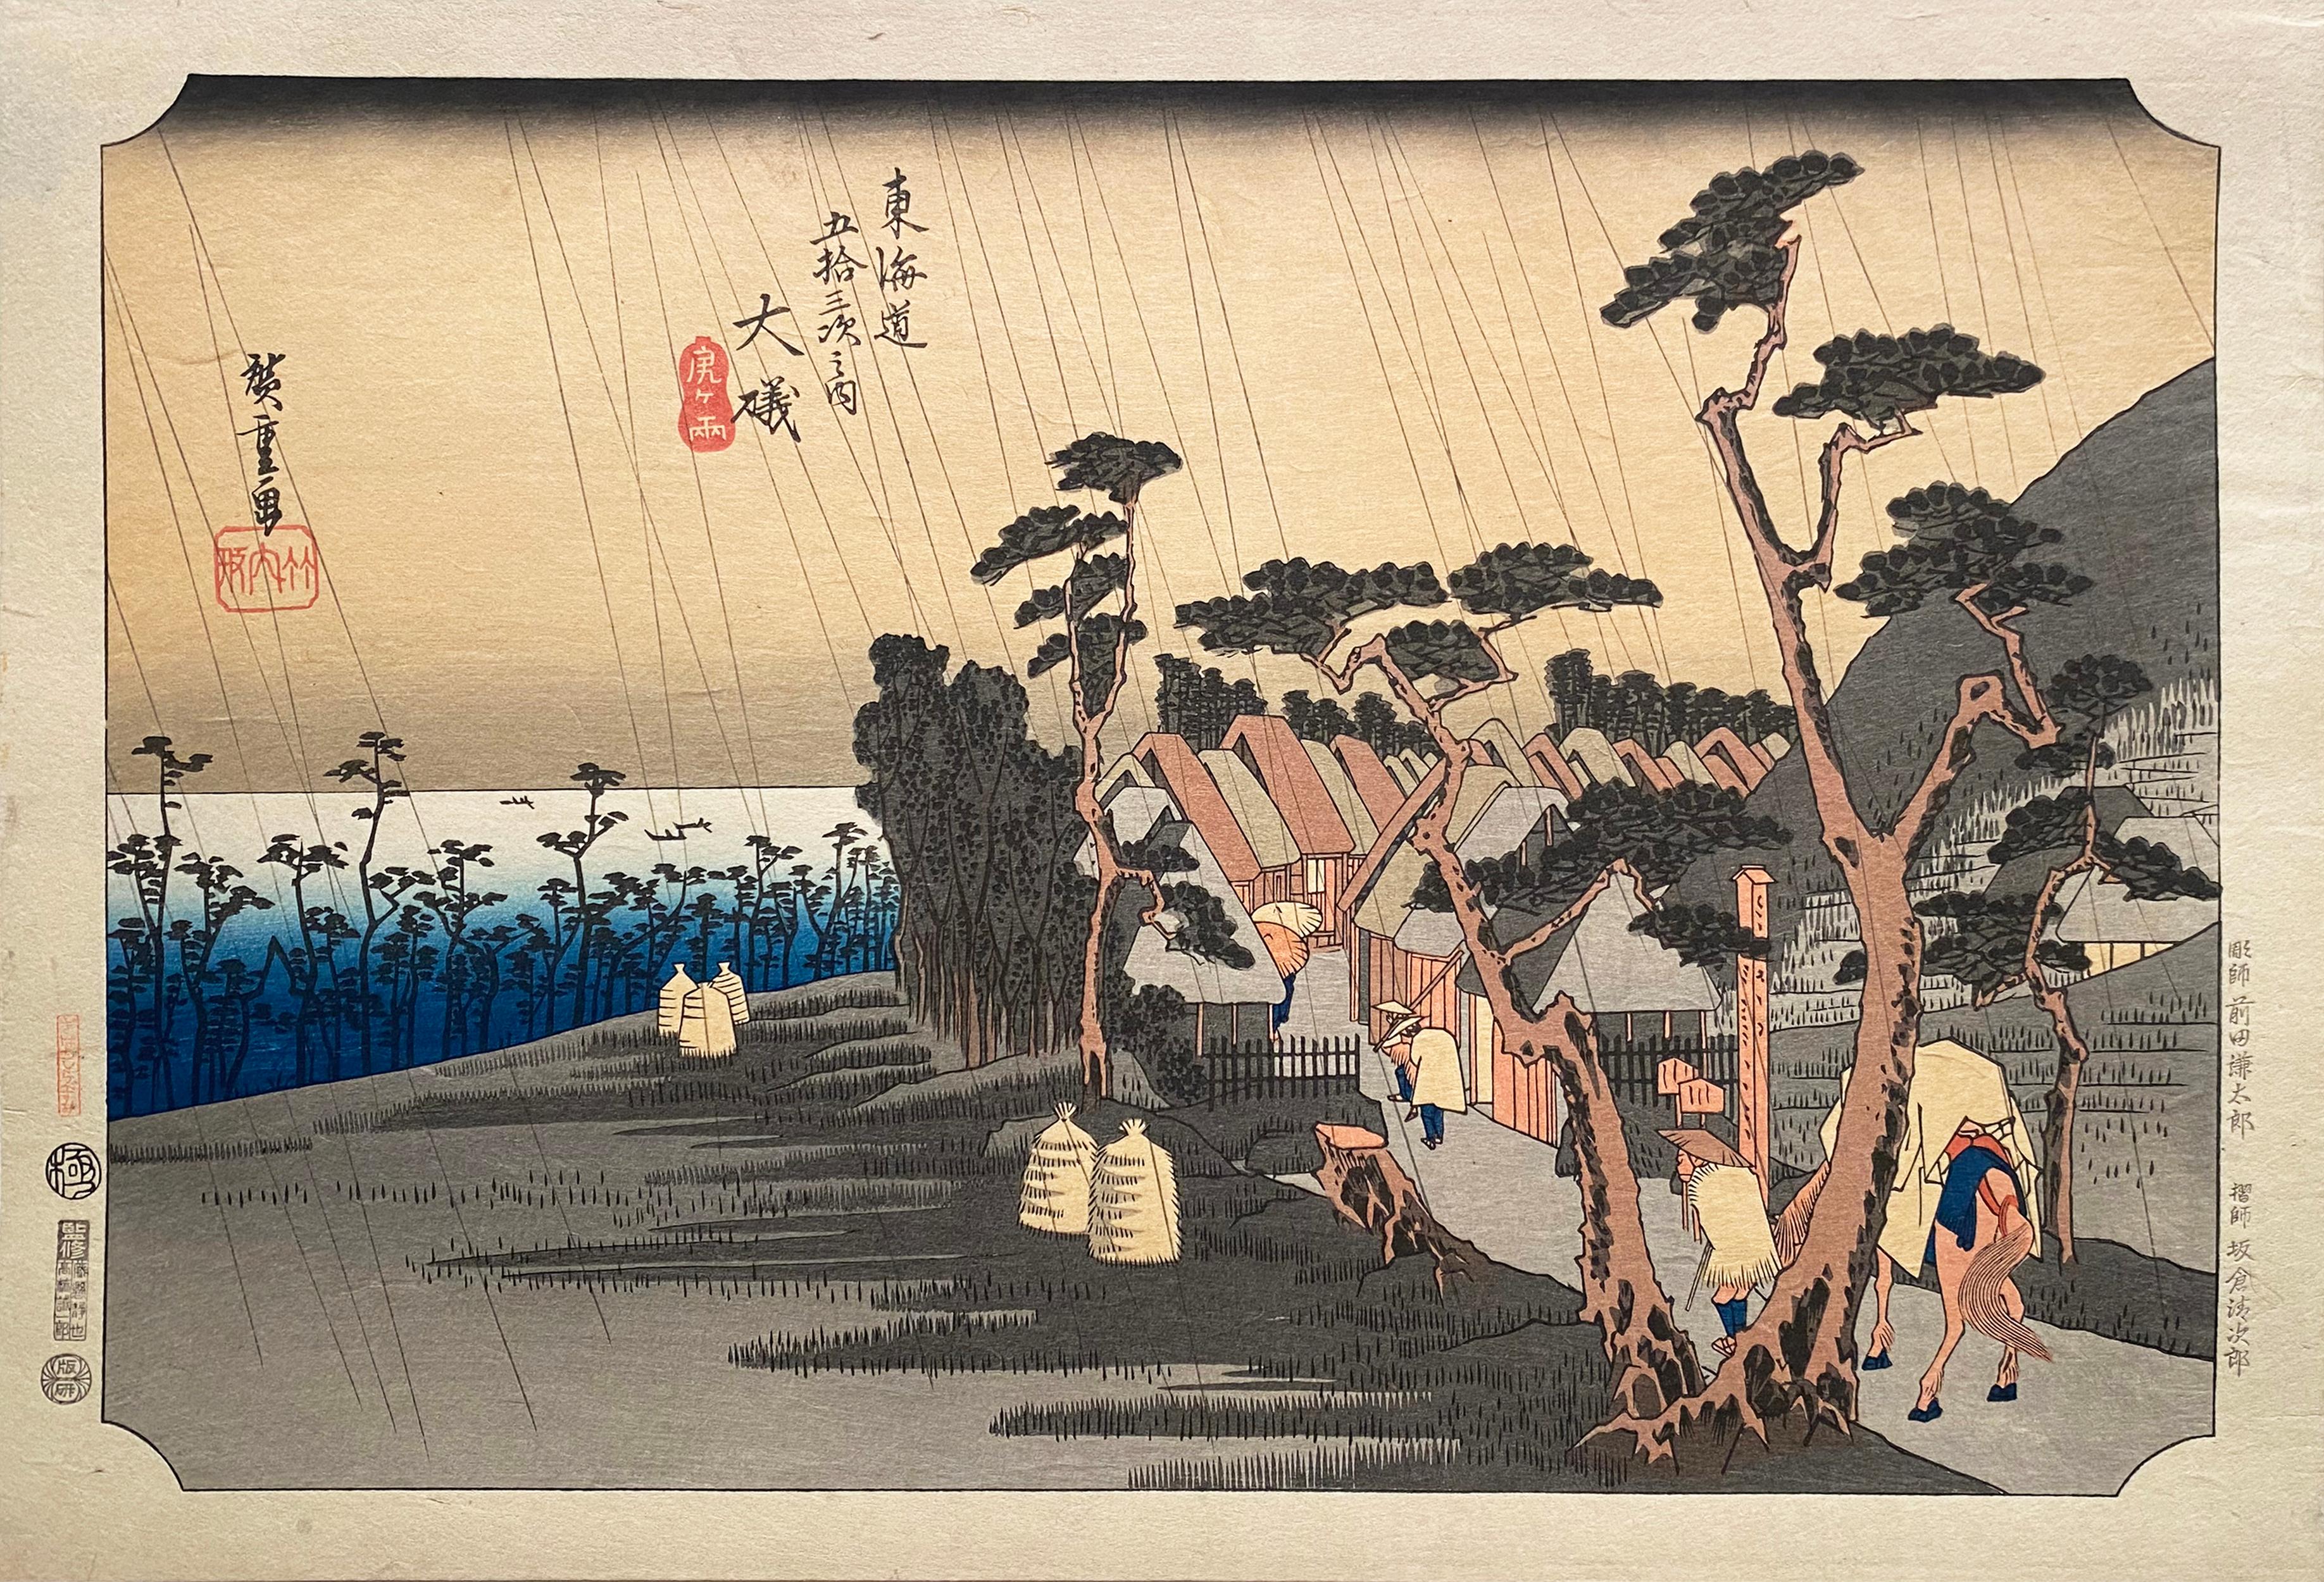 Vue de Ōiso, d'après Utagawa Hiroshige 歌川廣重, gravure sur bois Ukiyo-e, Tokaido